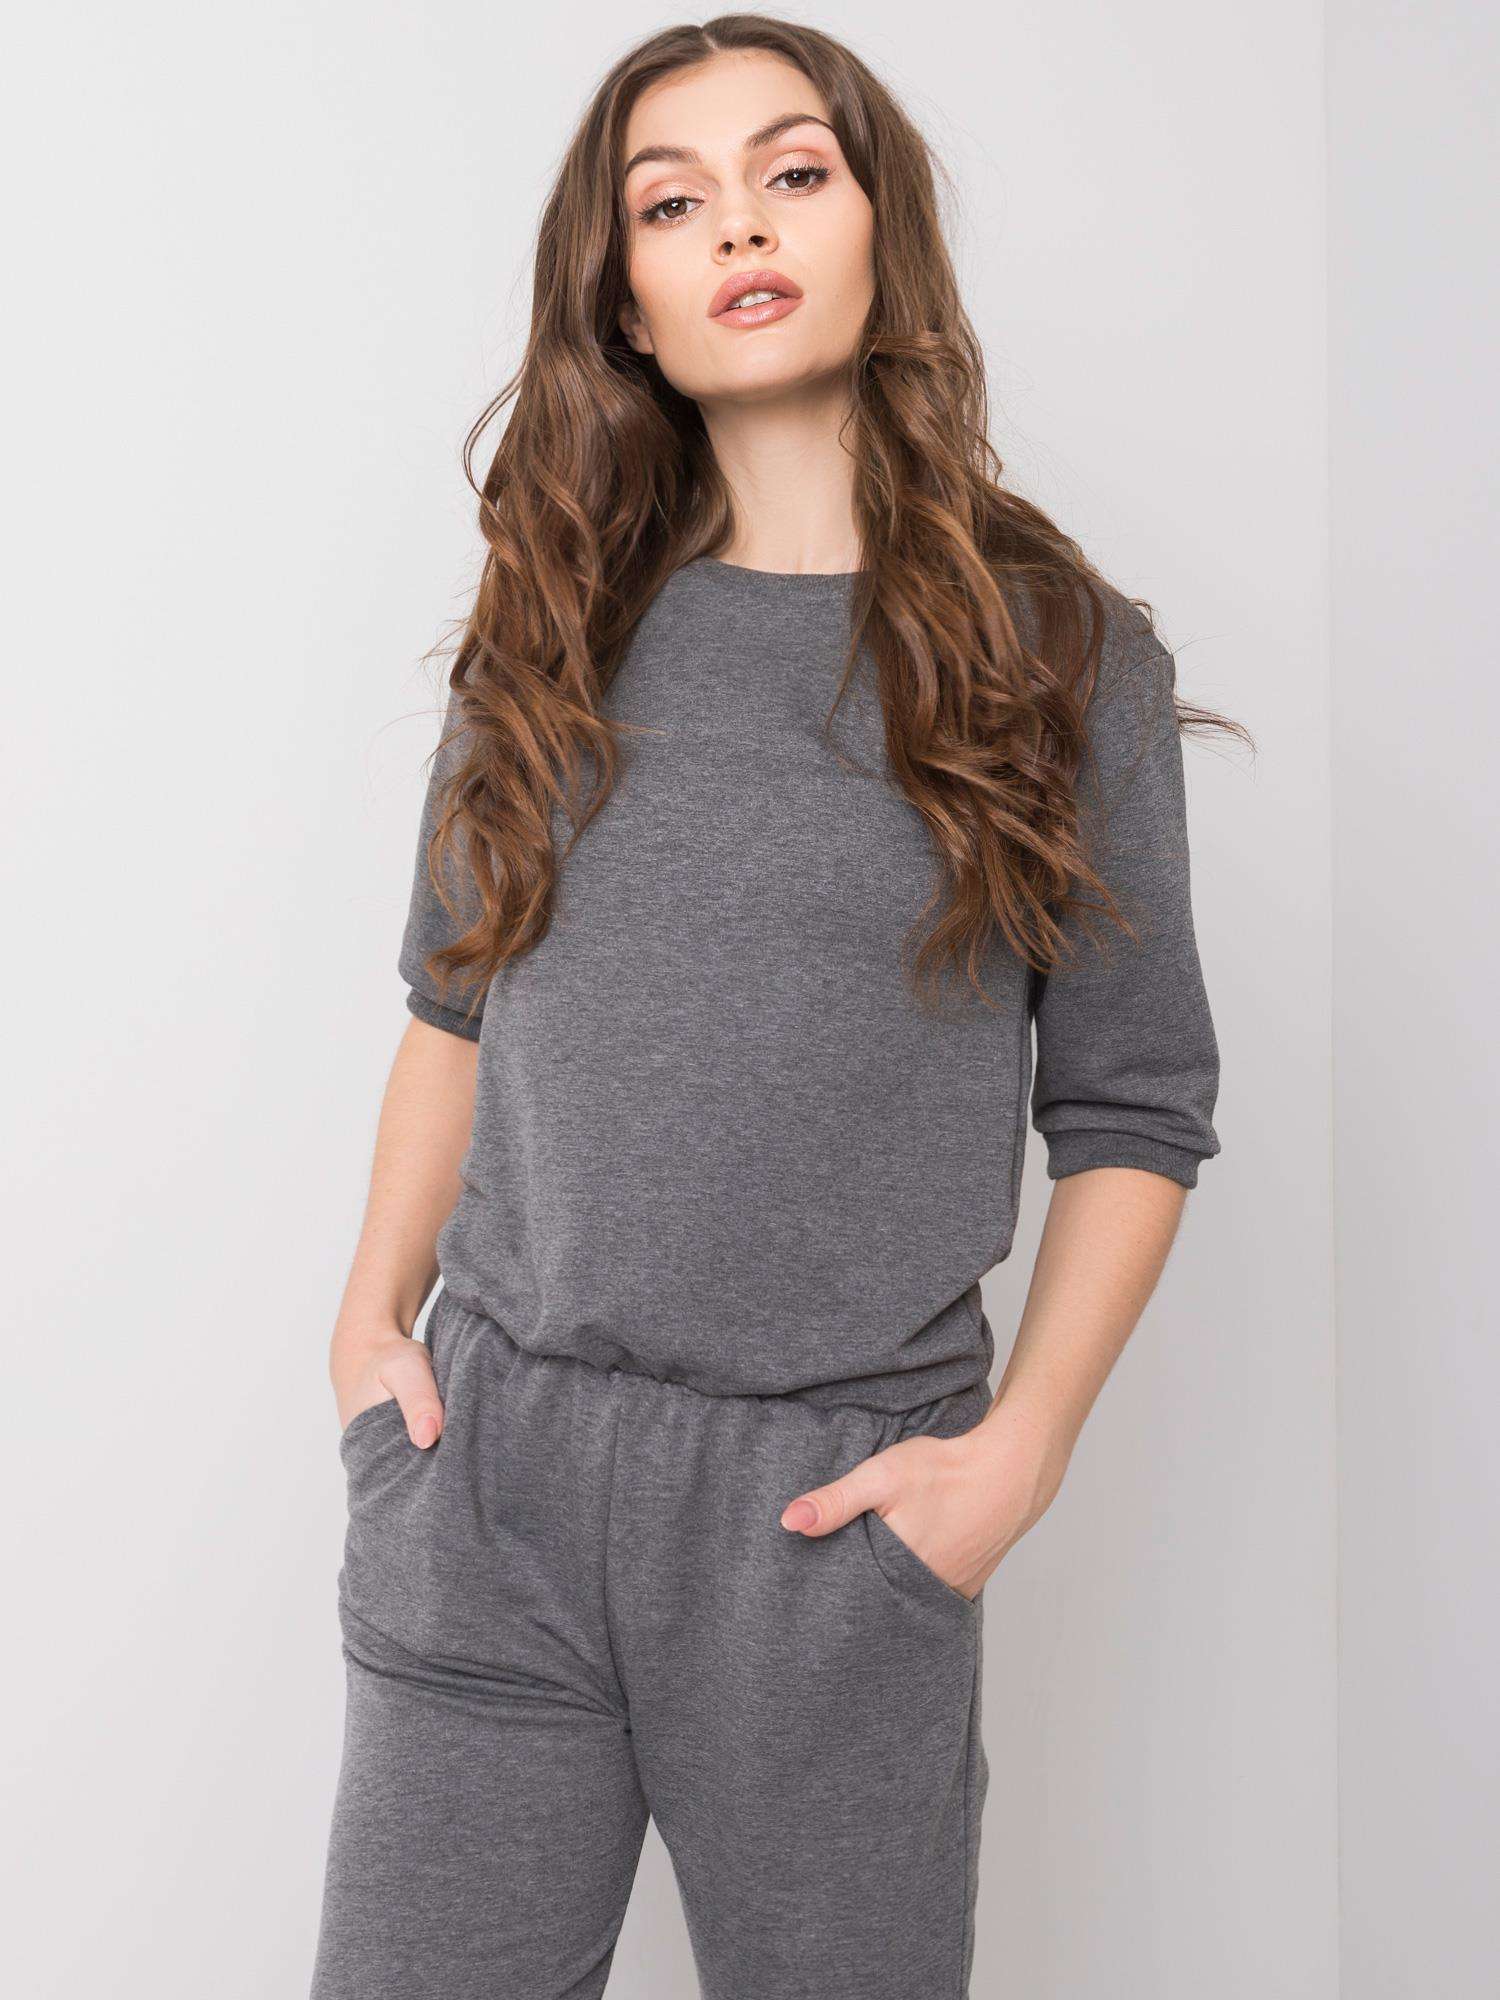 Women's dark gray melange jumpsuit